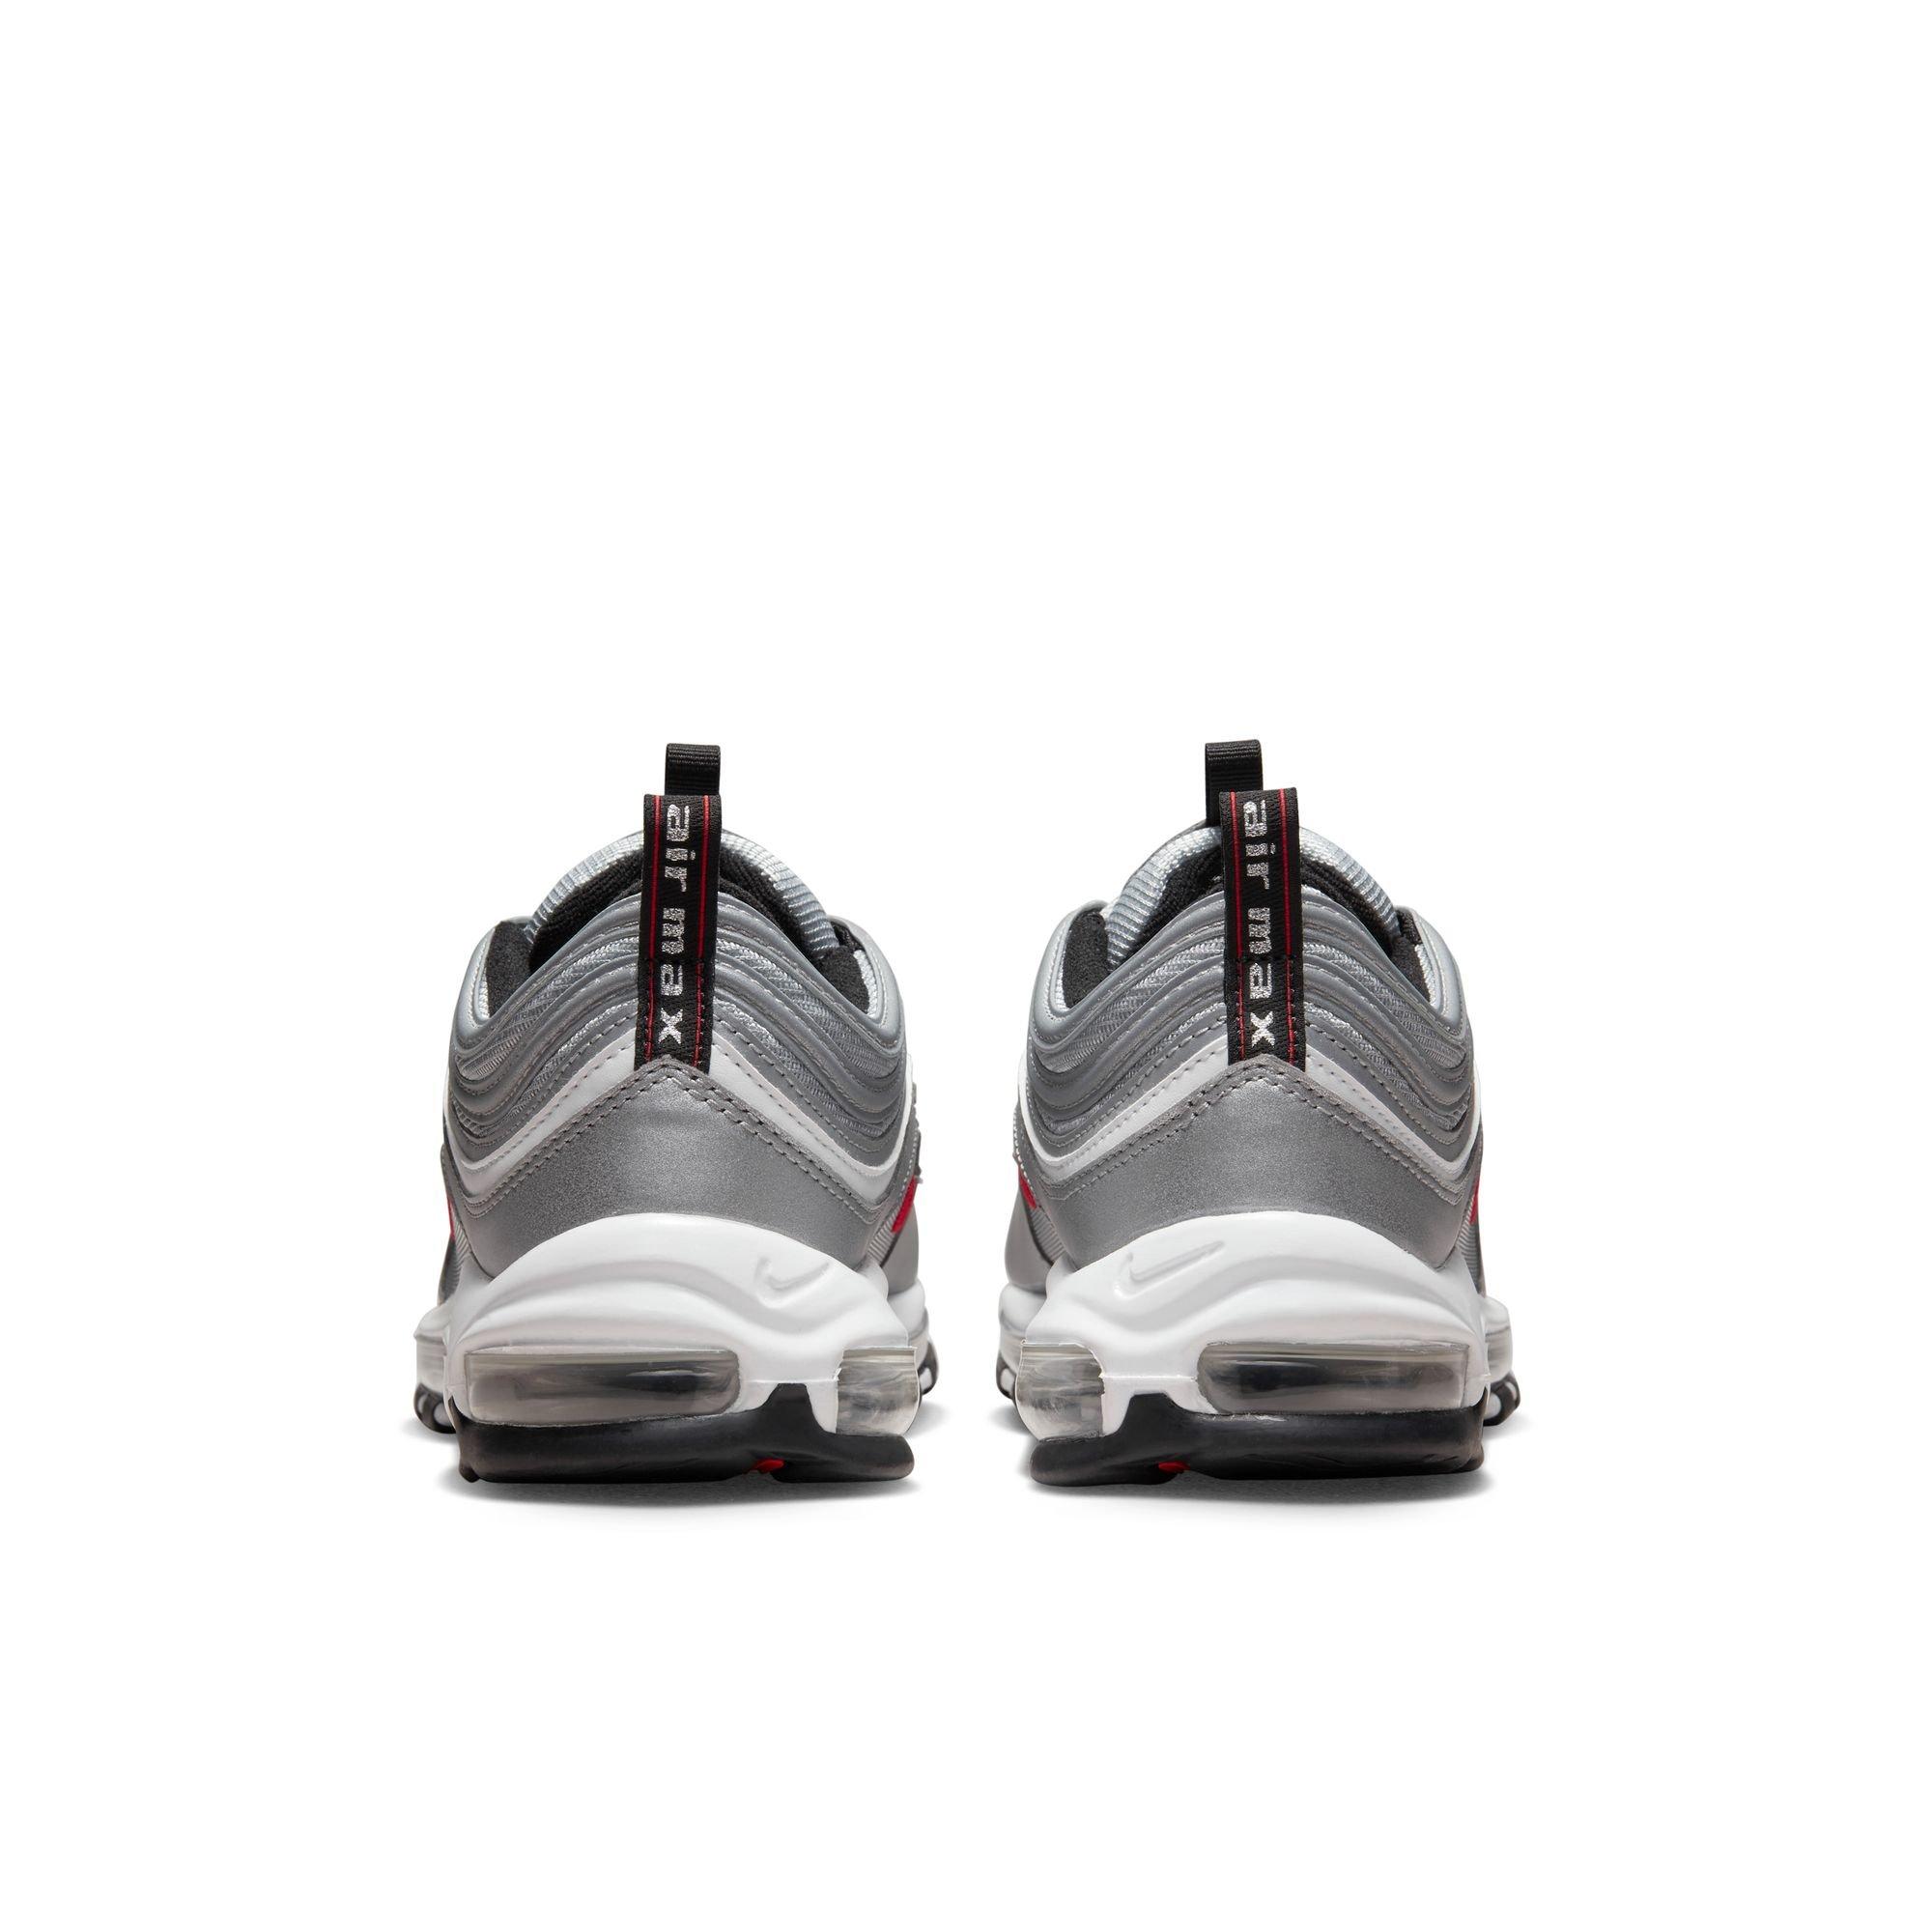 Air Max 97 OG​ "Metallic Silver/University Red/Black" Shoe​